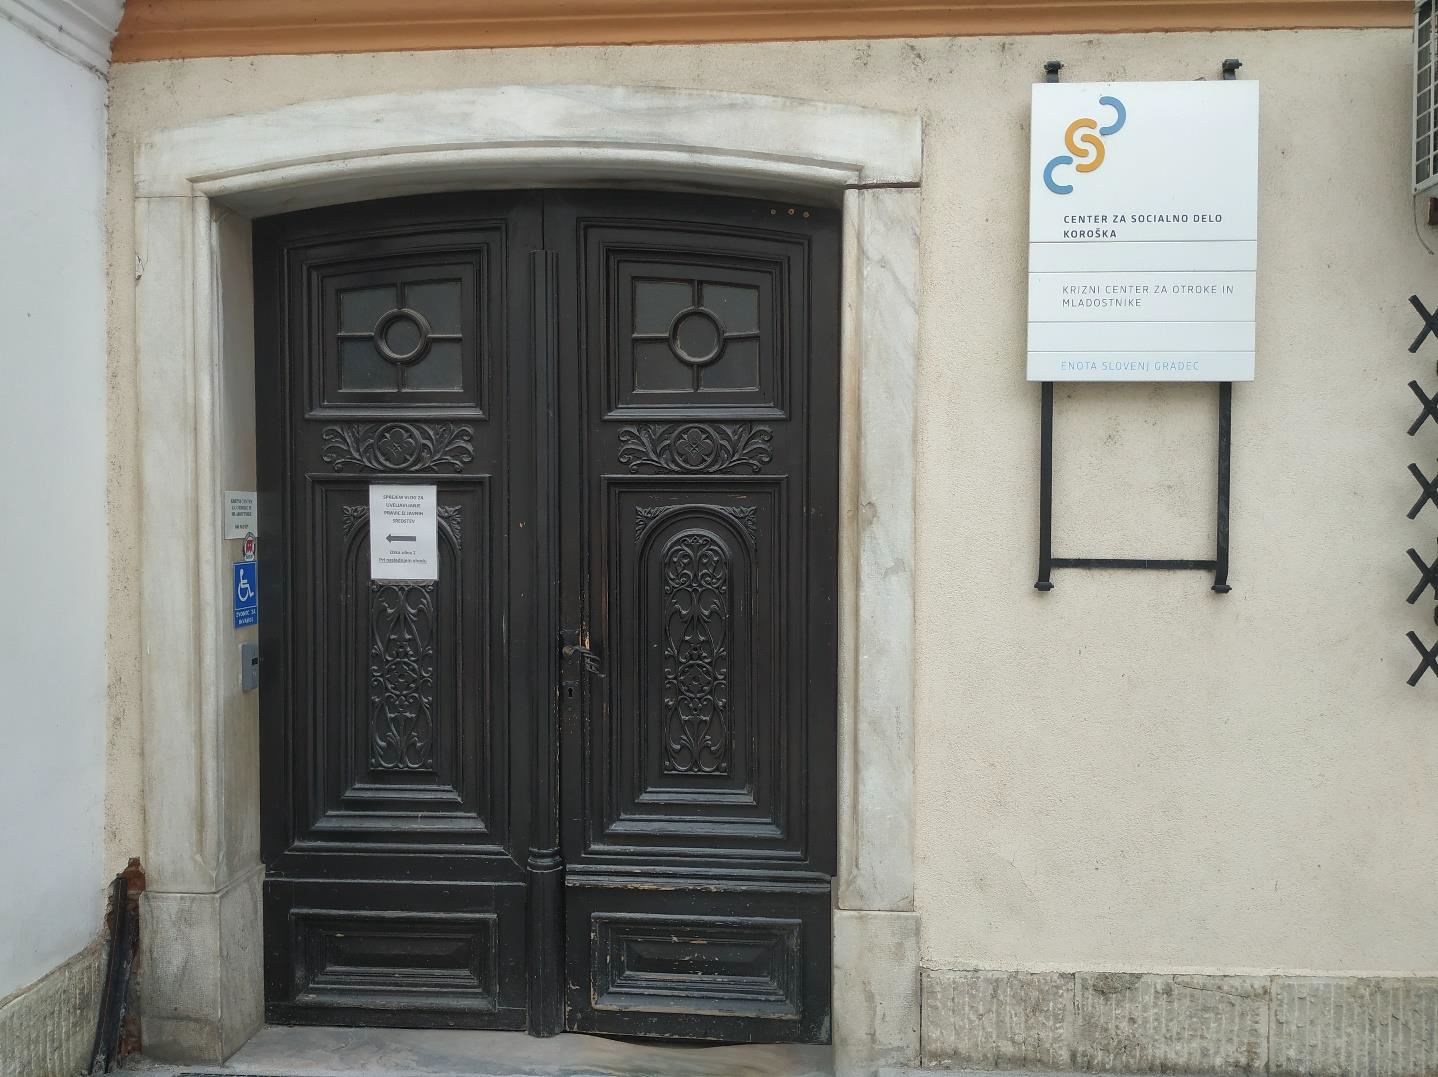 Vhod v zgradbo CSD Koroška